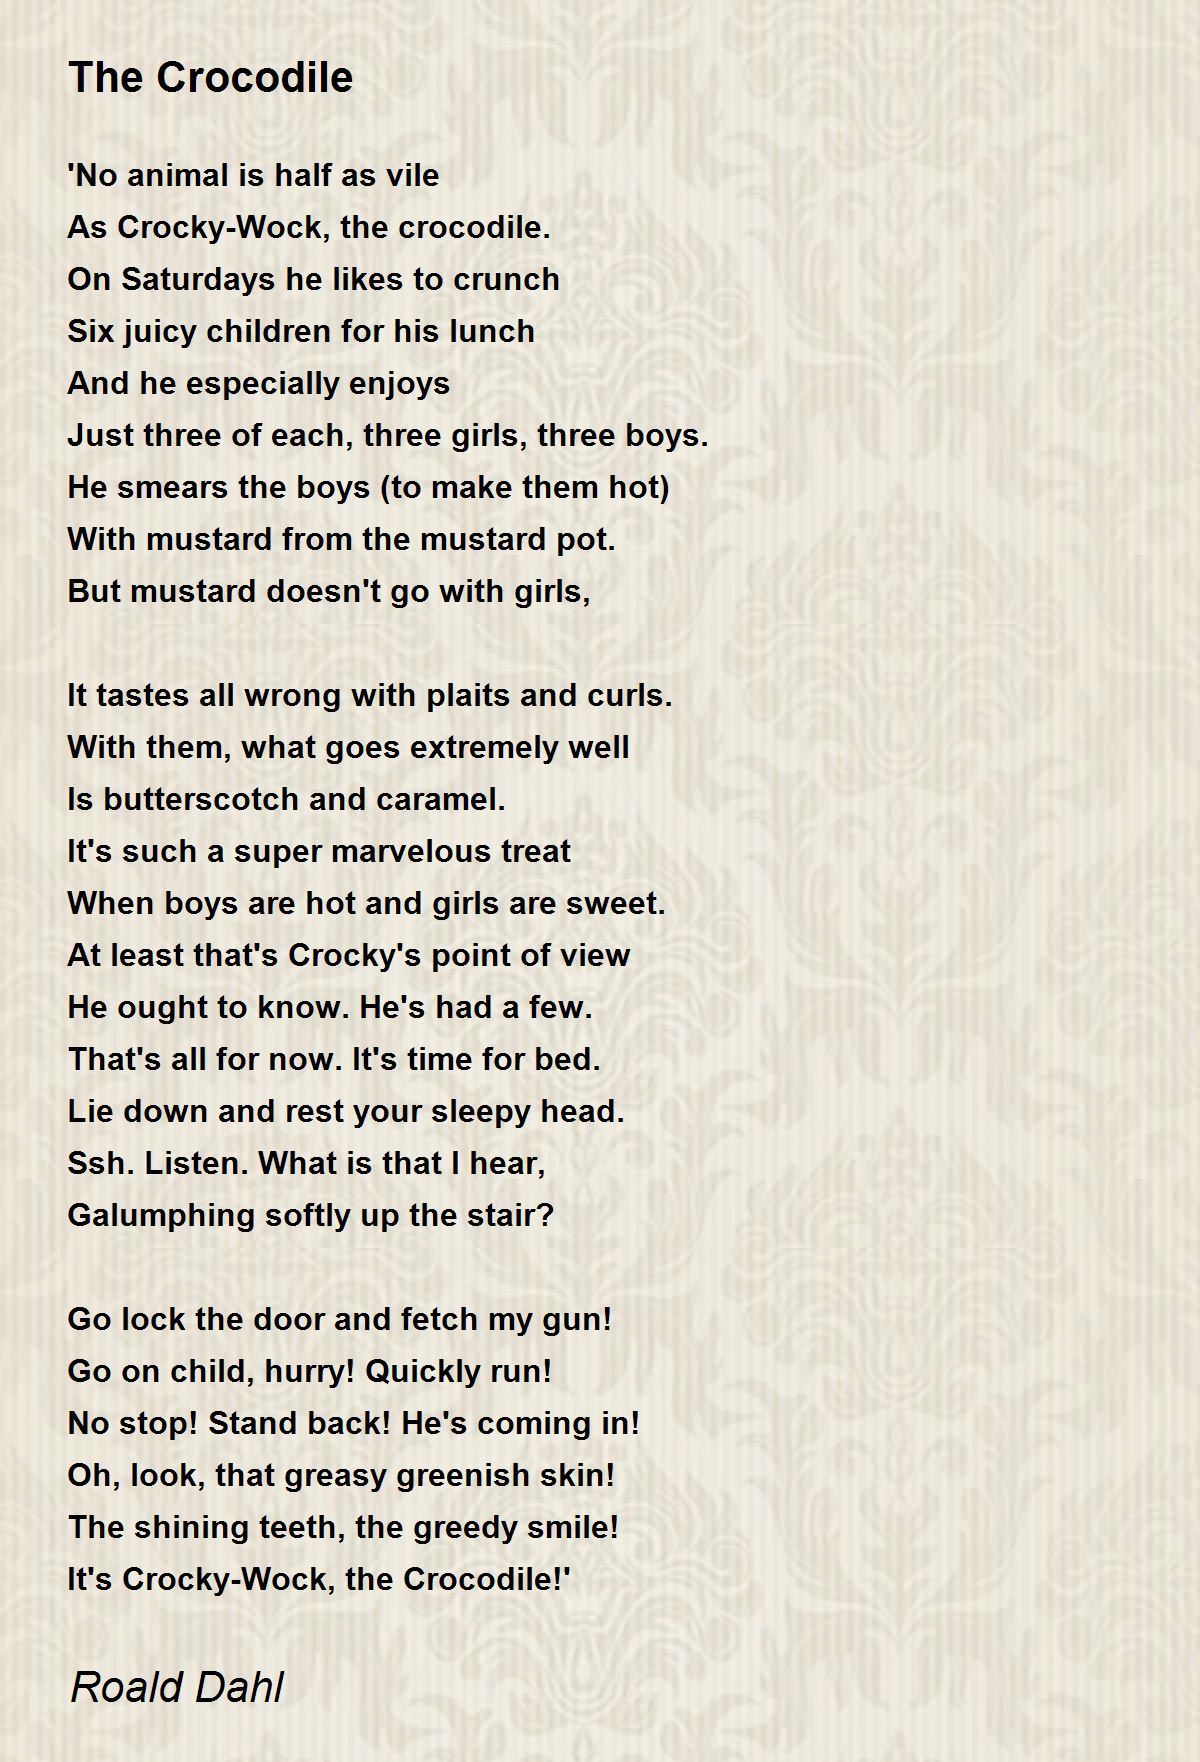 The Crocodile - The Crocodile Poem by Roald Dahl